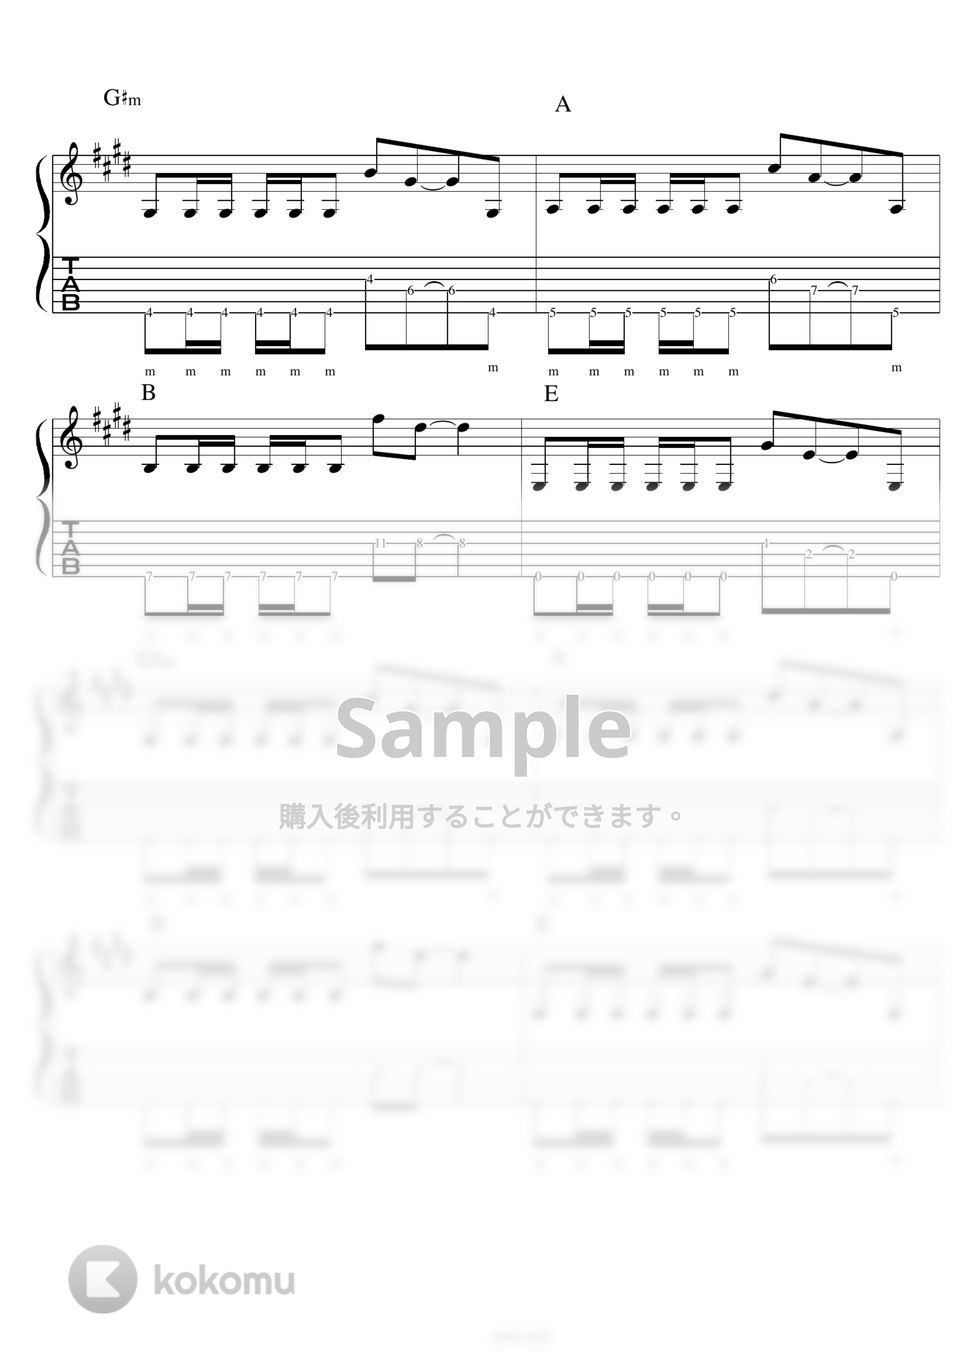 ken yokoyama - SAVE US ギター演奏動画付TAB譜 by バイトーン音楽教室